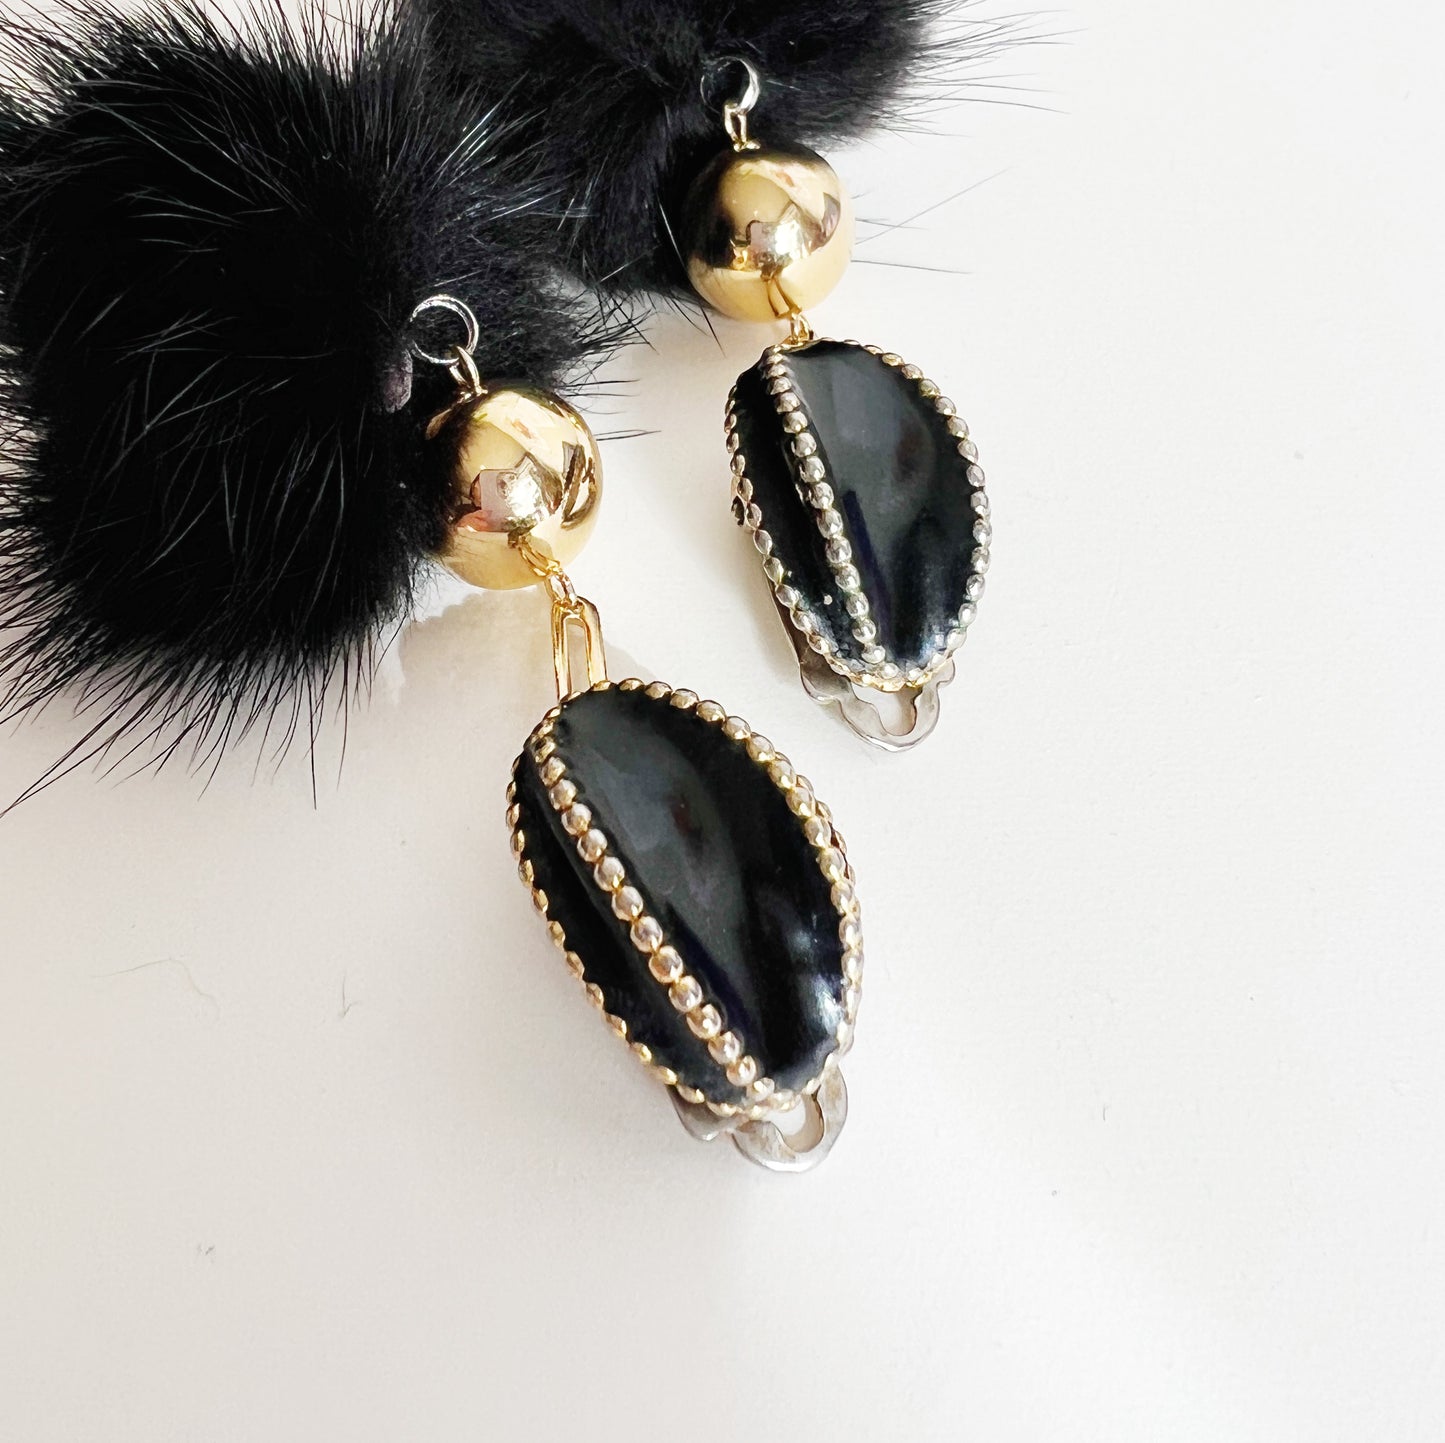 Black fur earrings -earrings type-